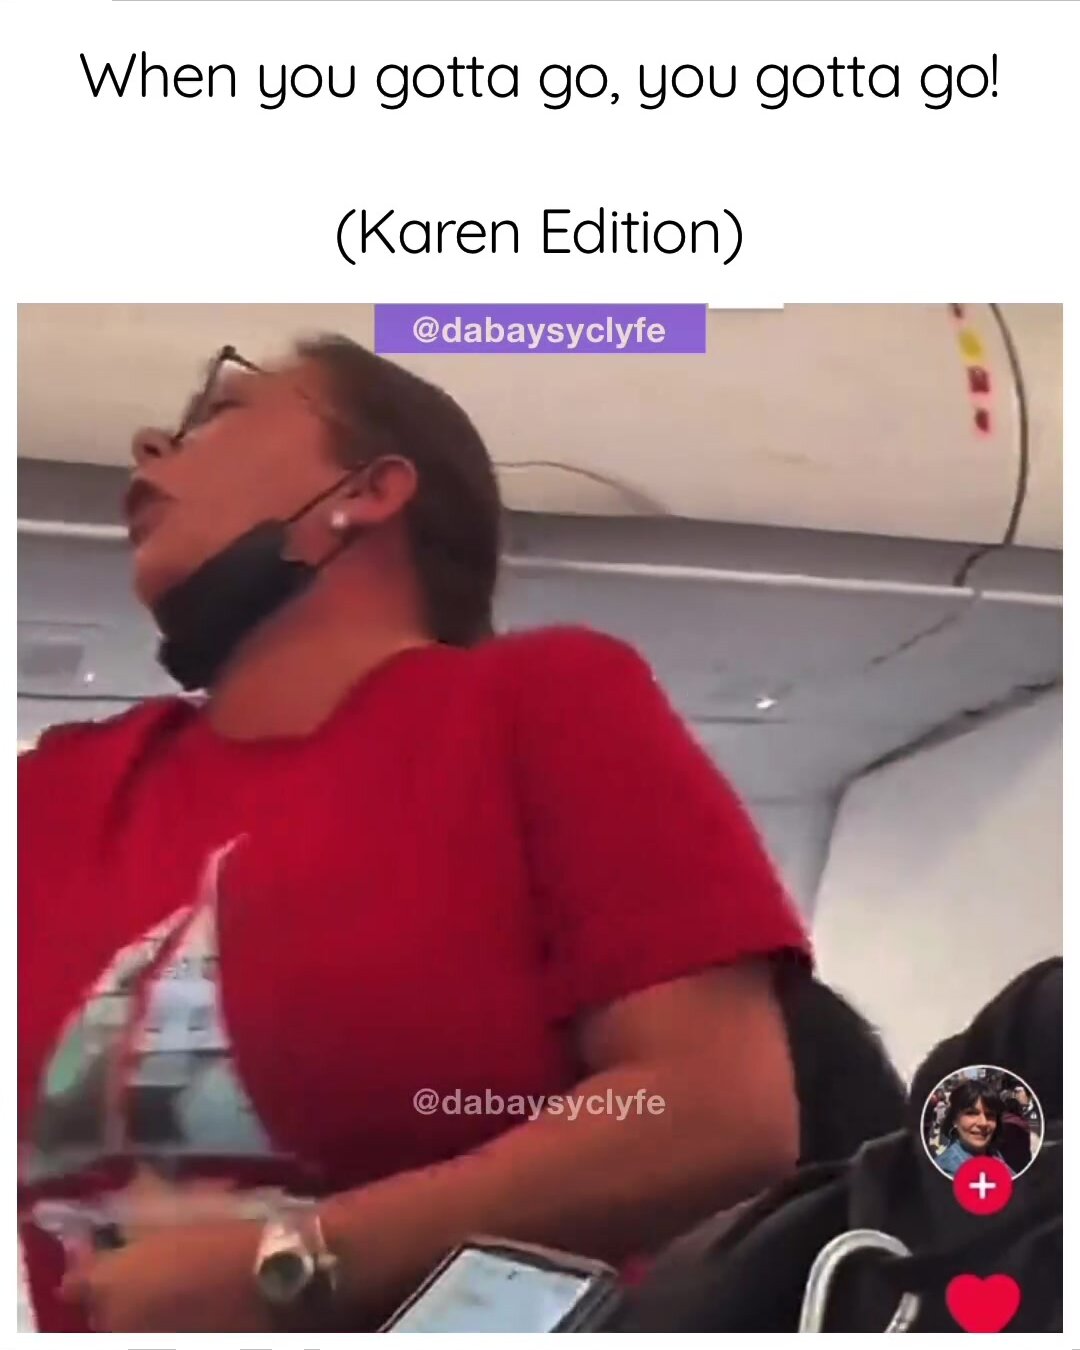 Pssnger causes disturbance on plane"I gotta pee"fuck u